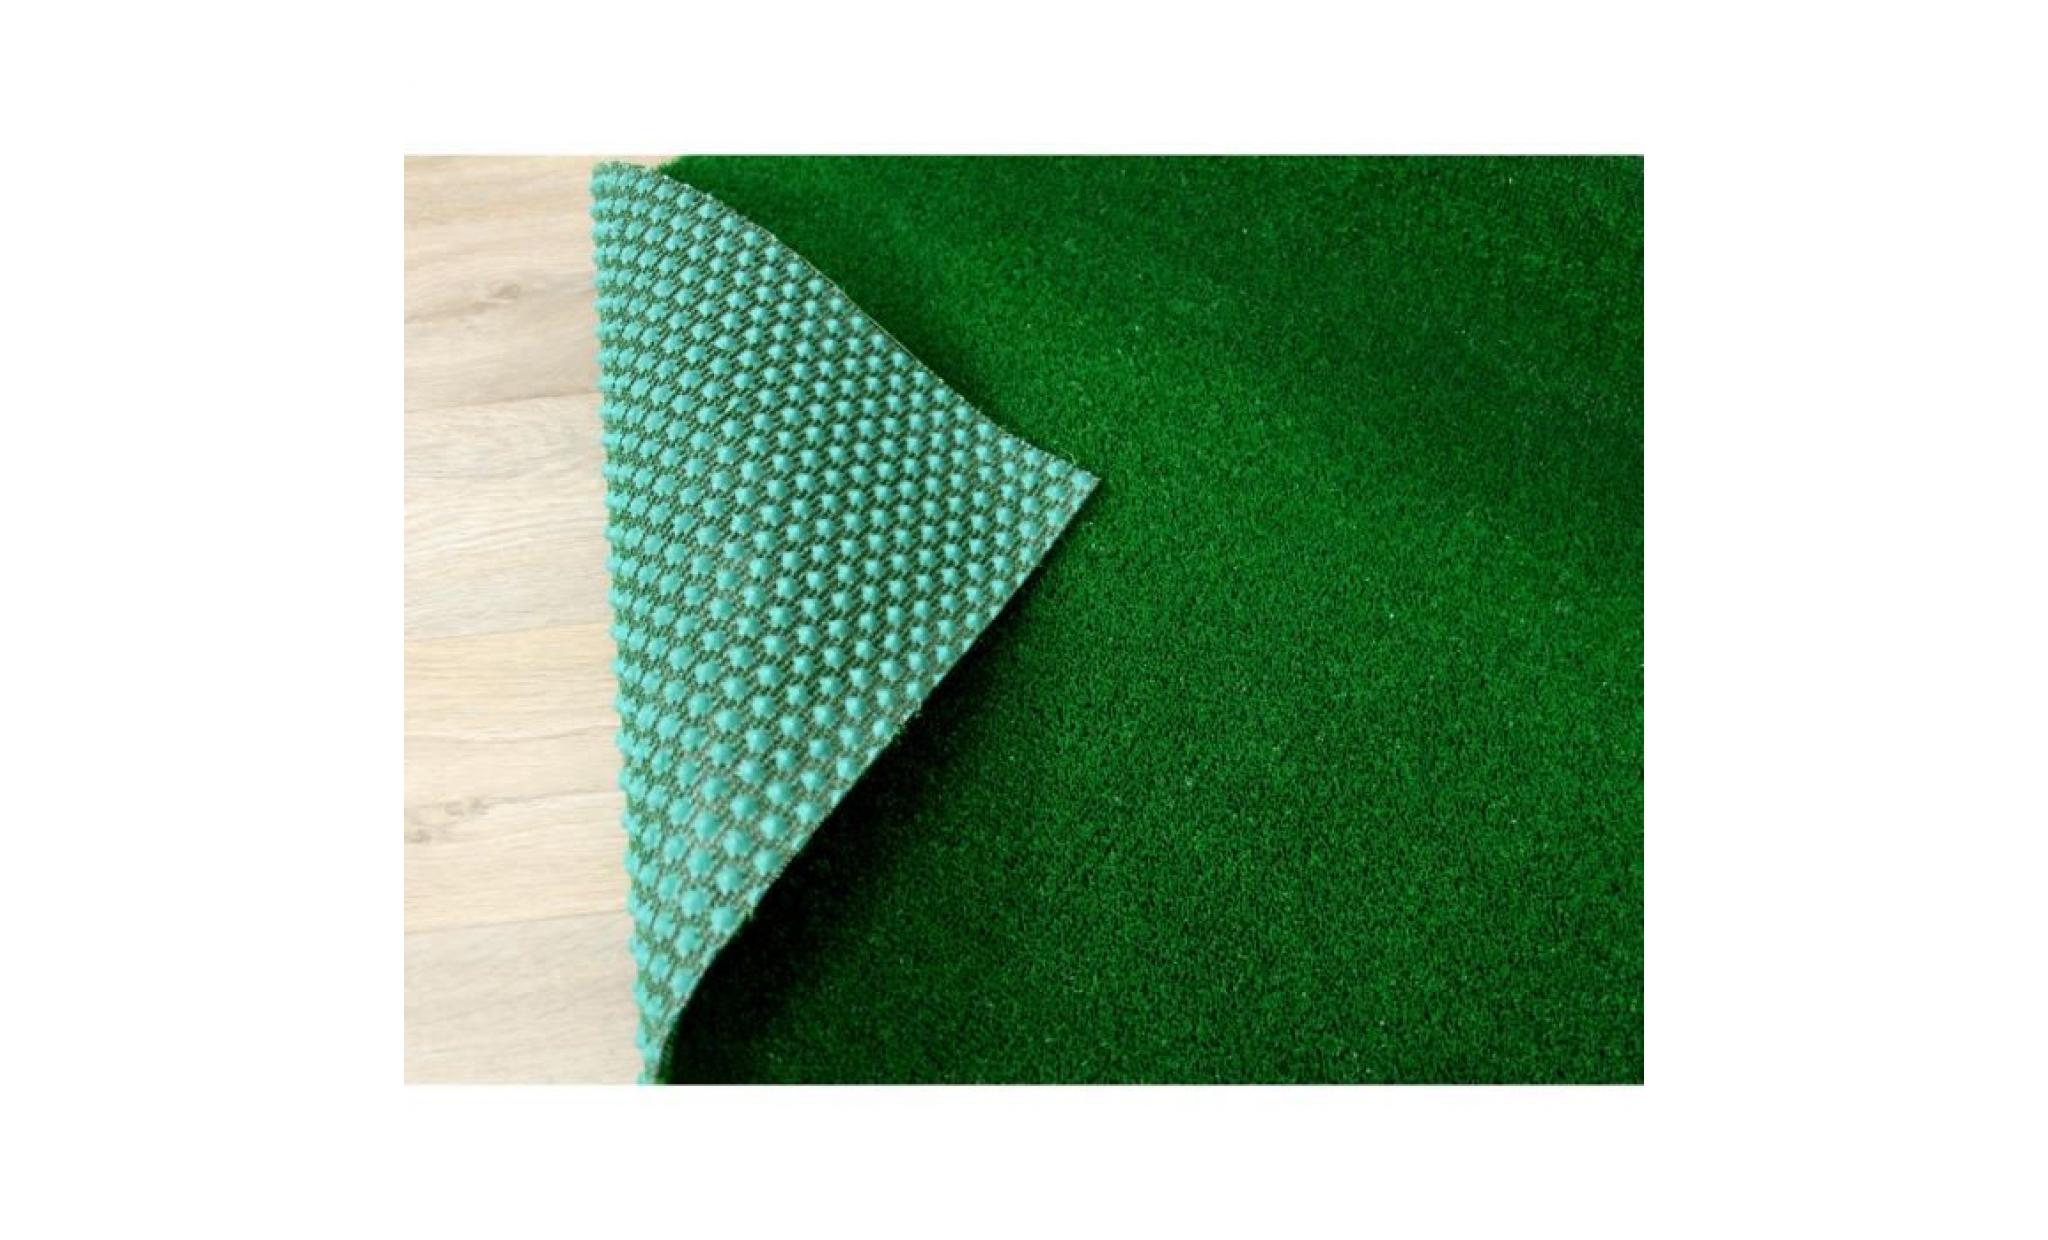 york   tapis type gazon artificiel avec nubs – pour jardin, terrasse, balcon   vert   [200x500 cm] pas cher